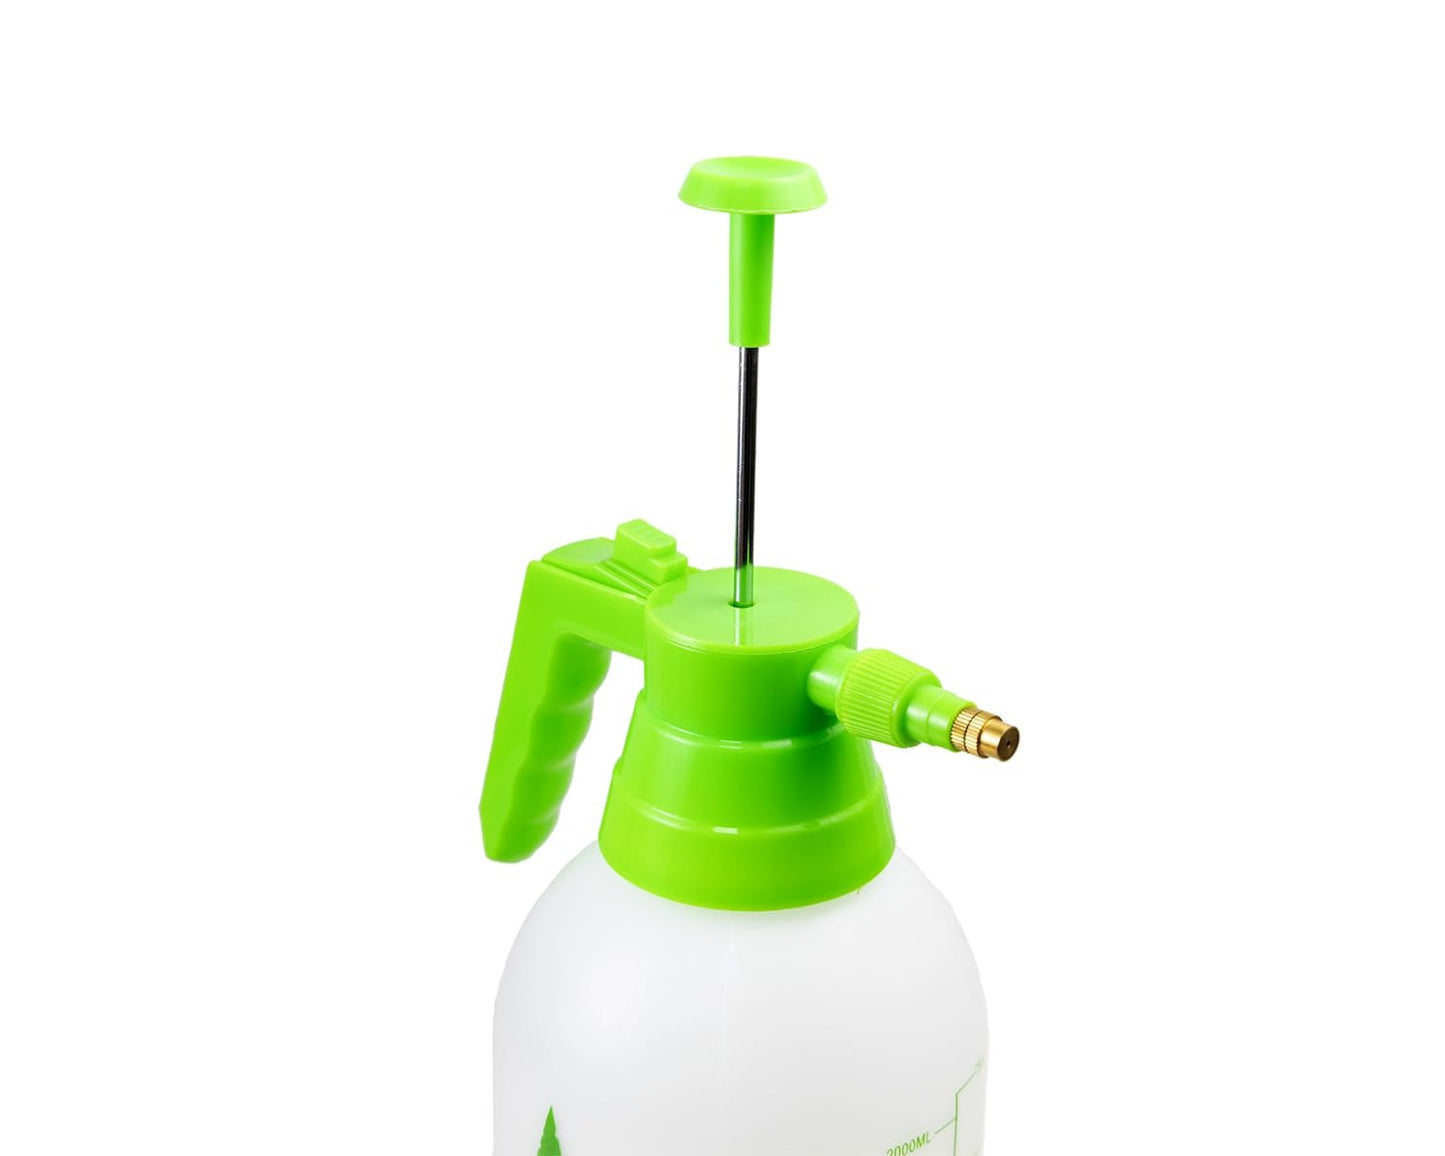 Spear 2L Water Sprayer: Garden Pump Pressure Sprayer with Ergonomic Design, Adjustable Spray Patterns, and Easy Refill for Plants, Car, Bike, and Home Garden